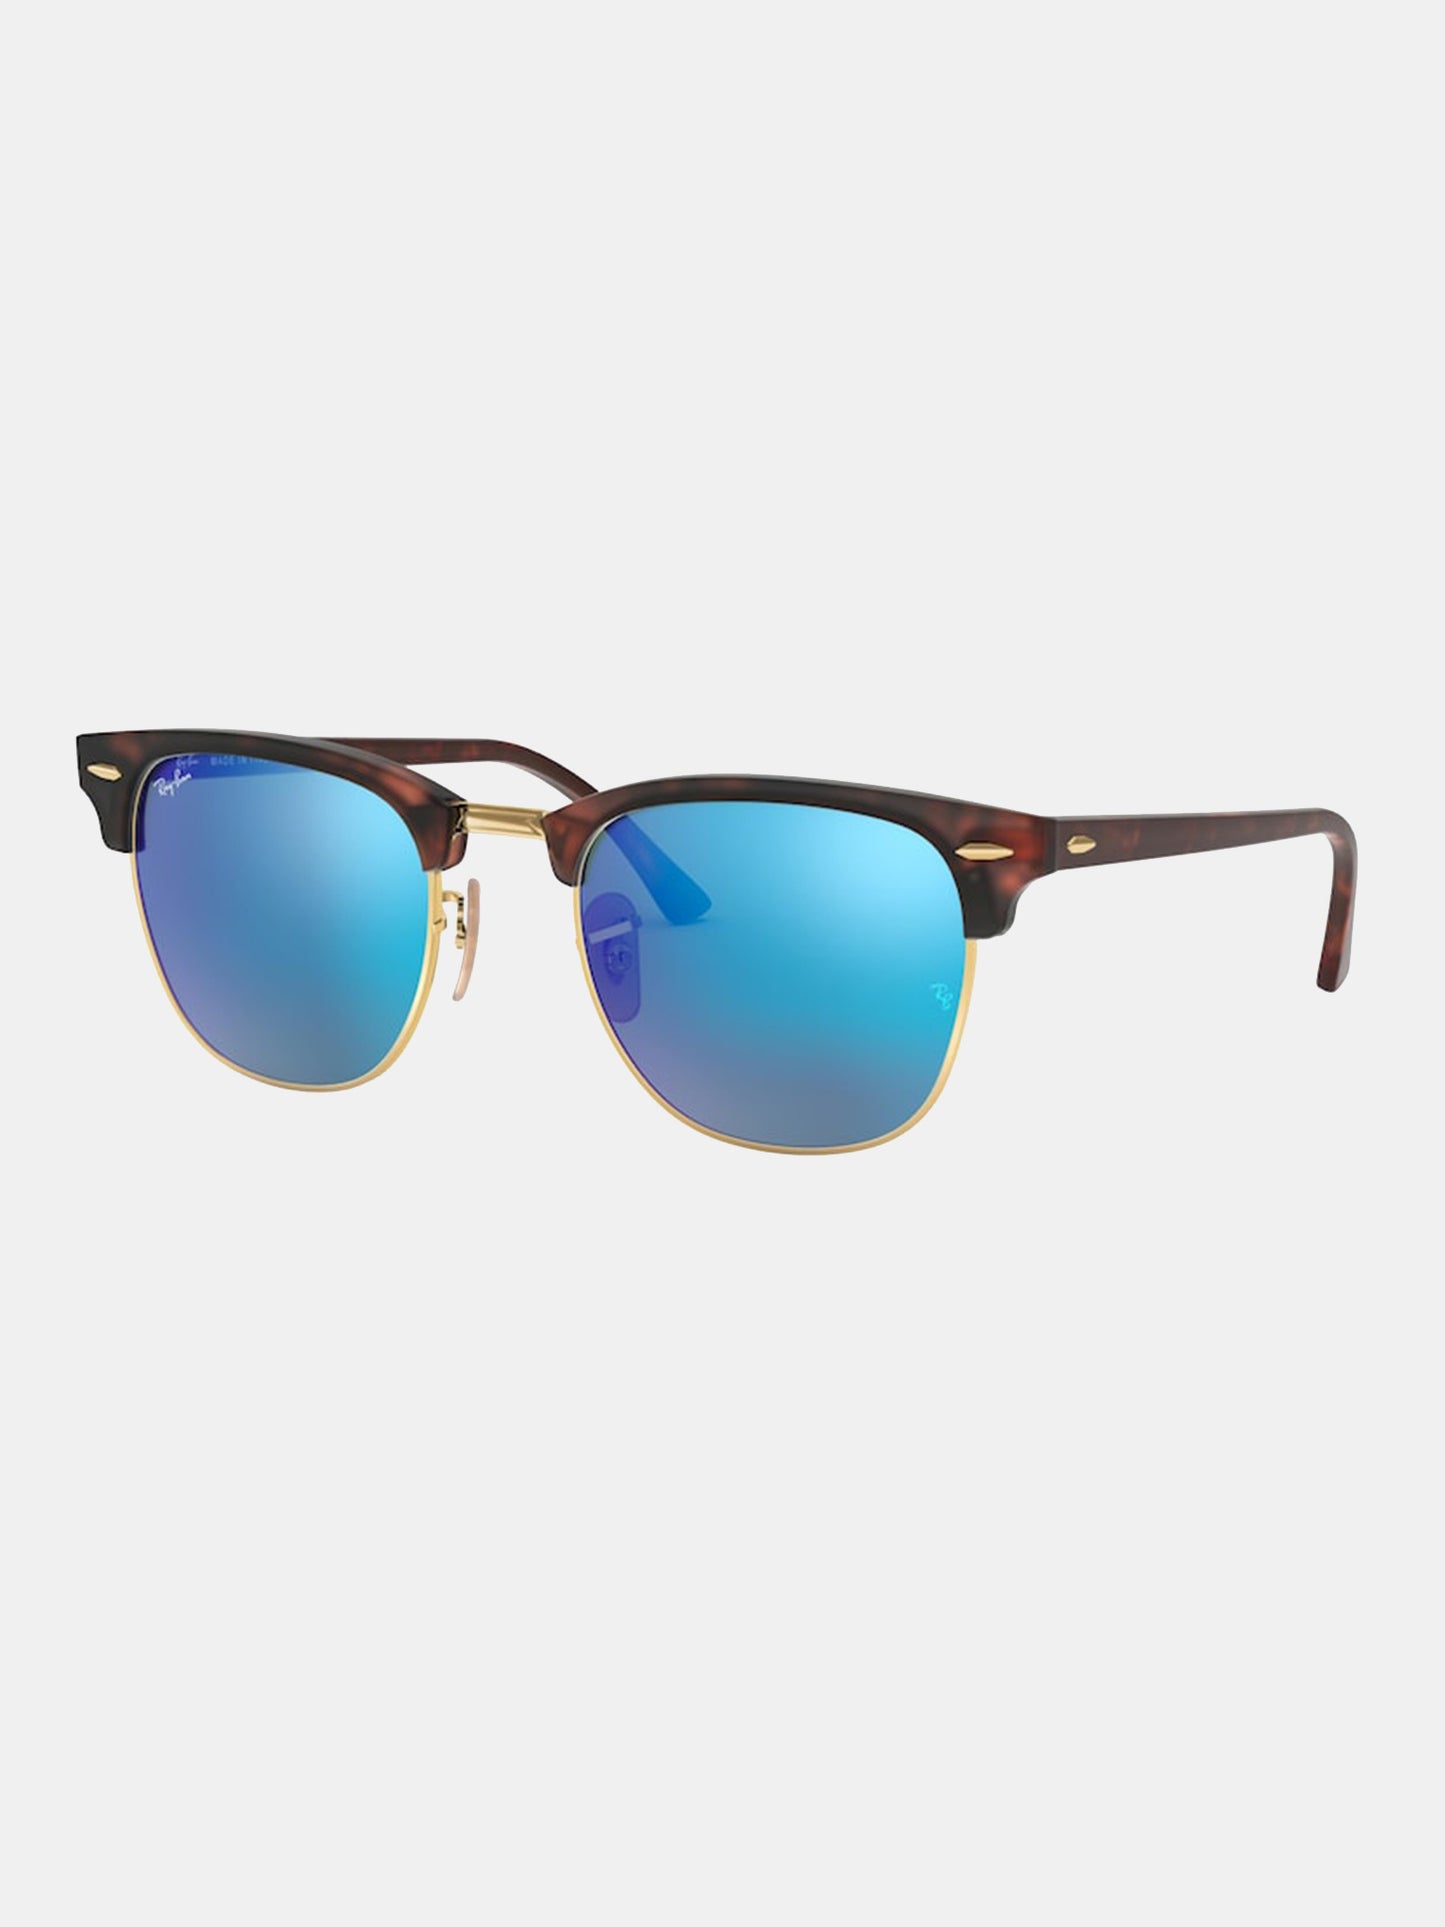 Ray-Ban Clubmaster Flash Lenses Sunglasses